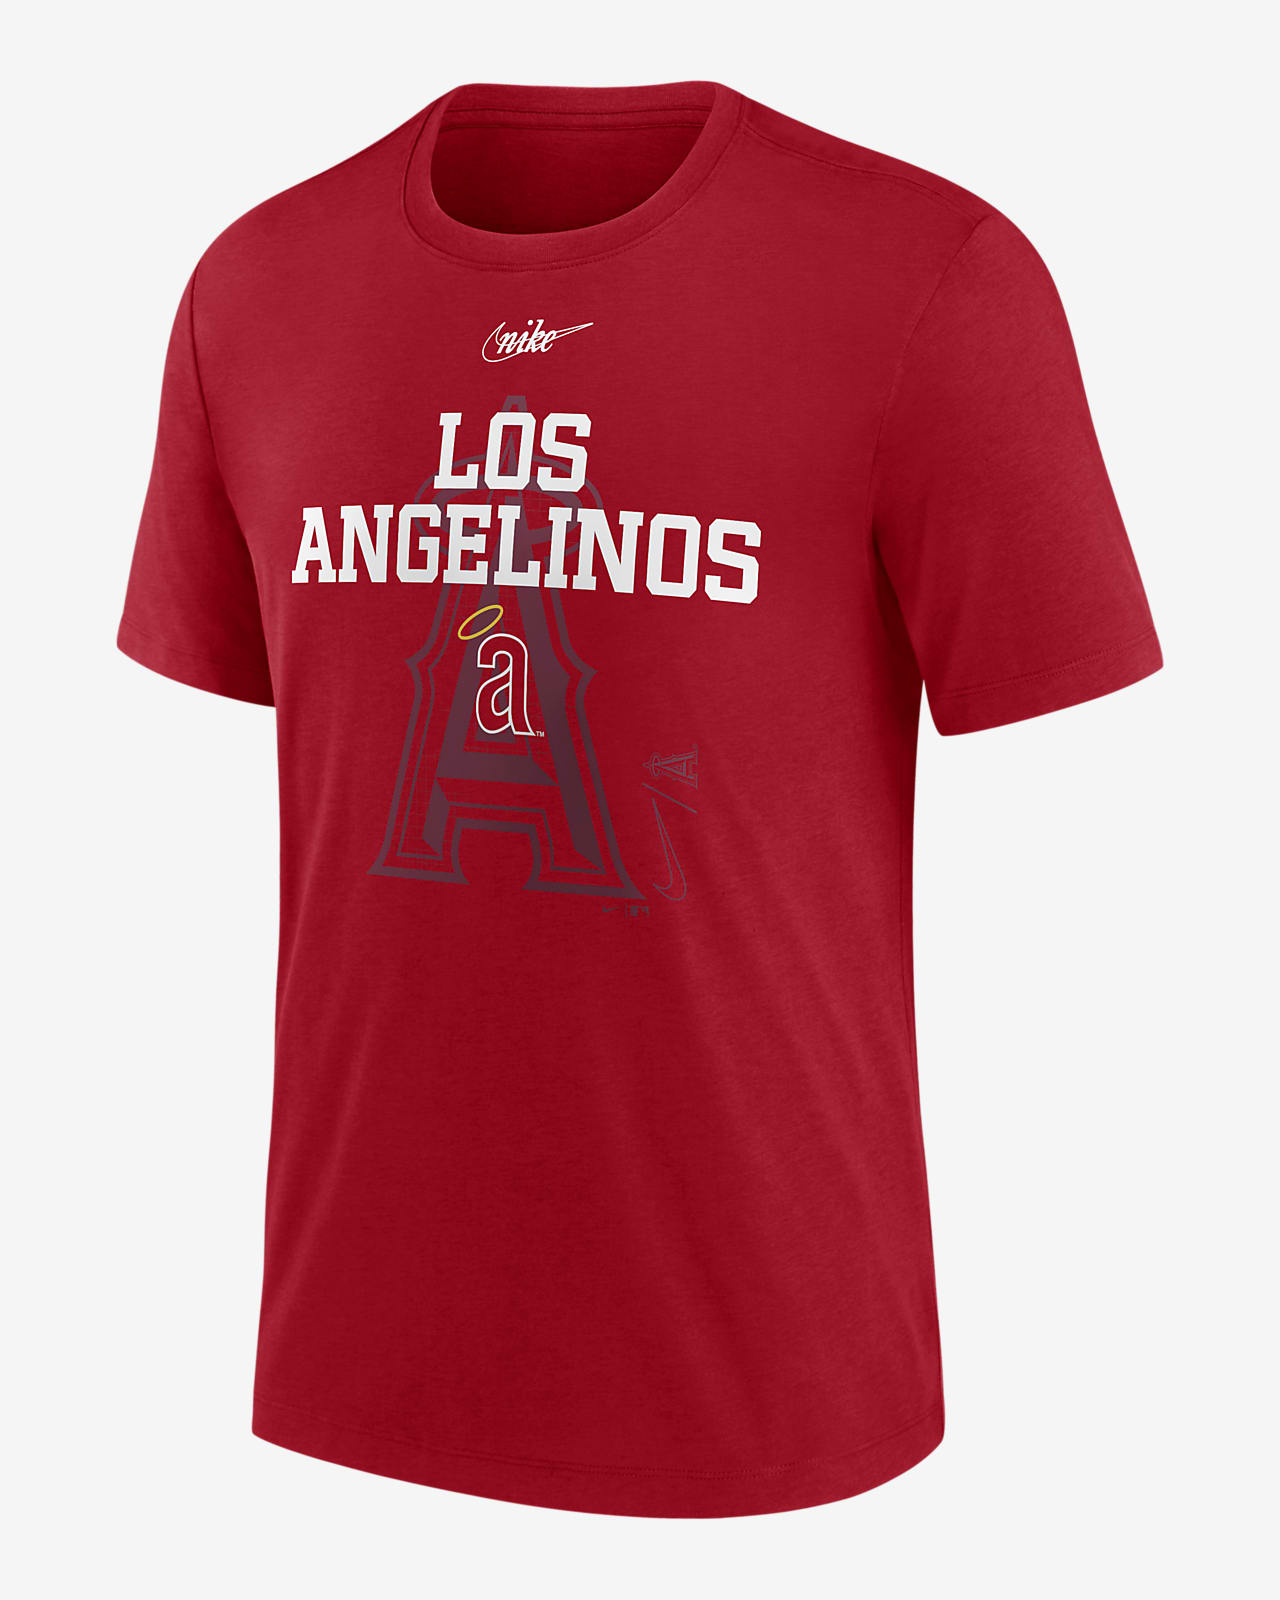 Nike Rewind Retro (MLB California Angels) Men's T-Shirt.